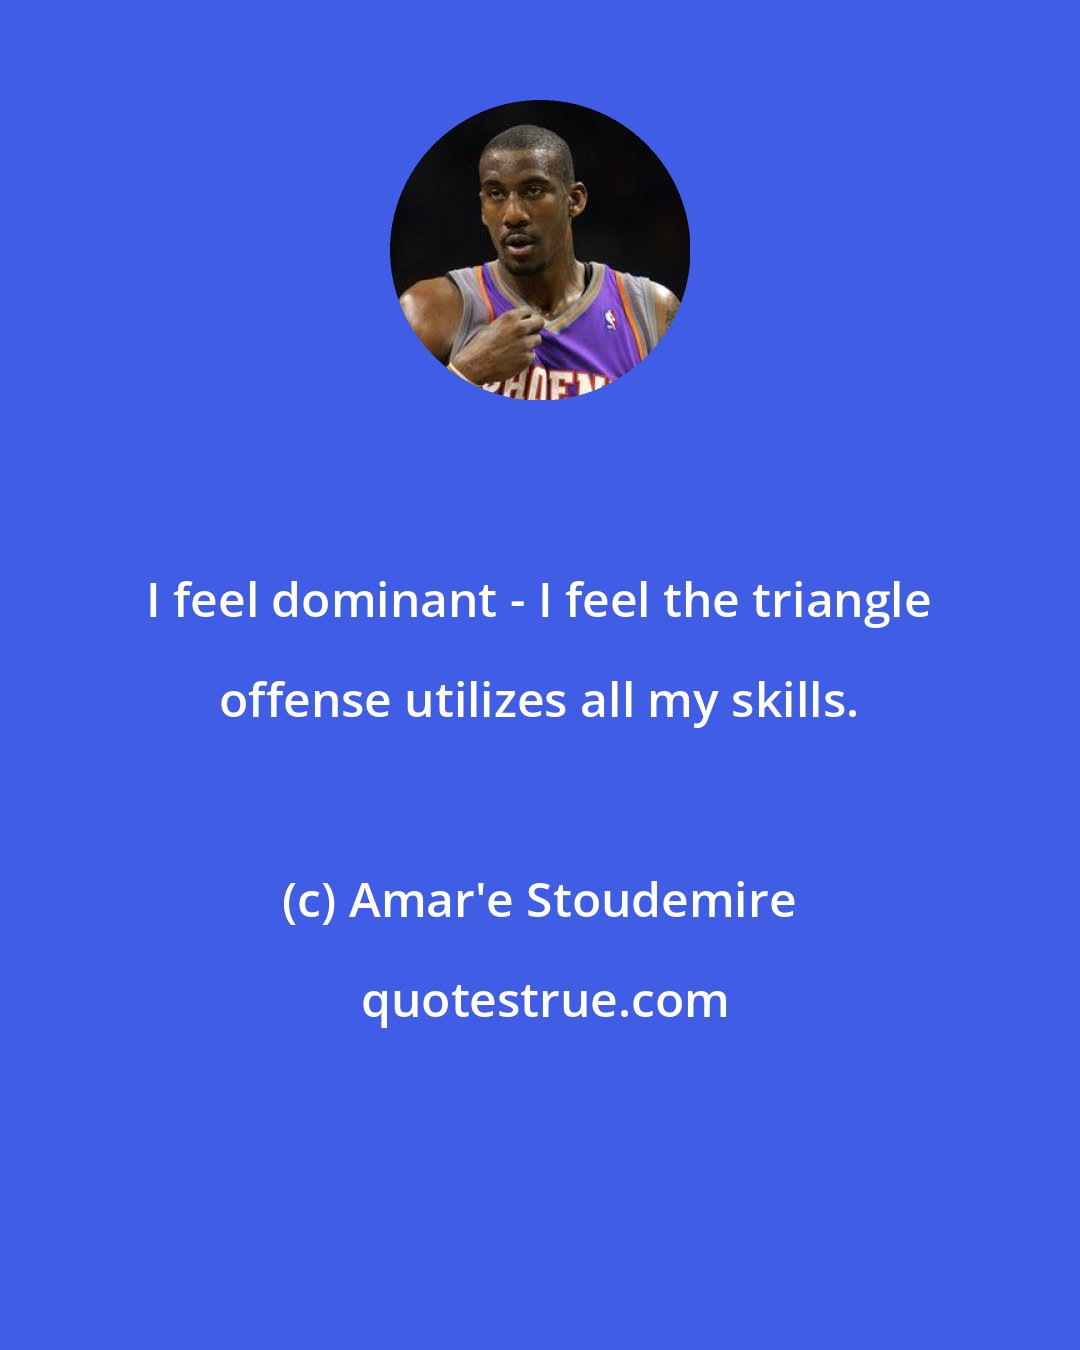 Amar'e Stoudemire: I feel dominant - I feel the triangle offense utilizes all my skills.